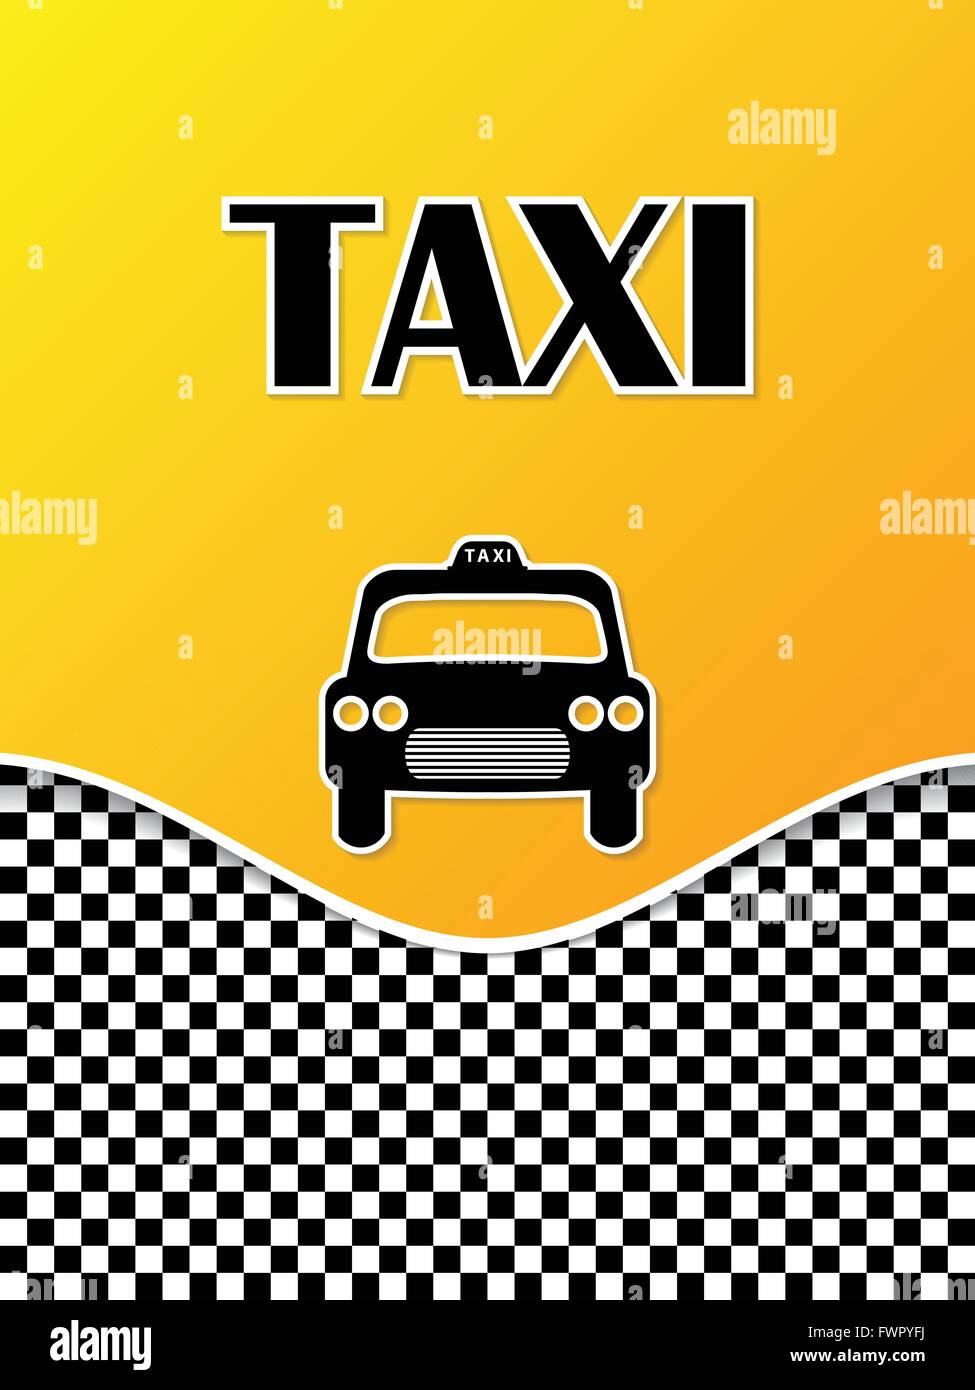 Cab Template